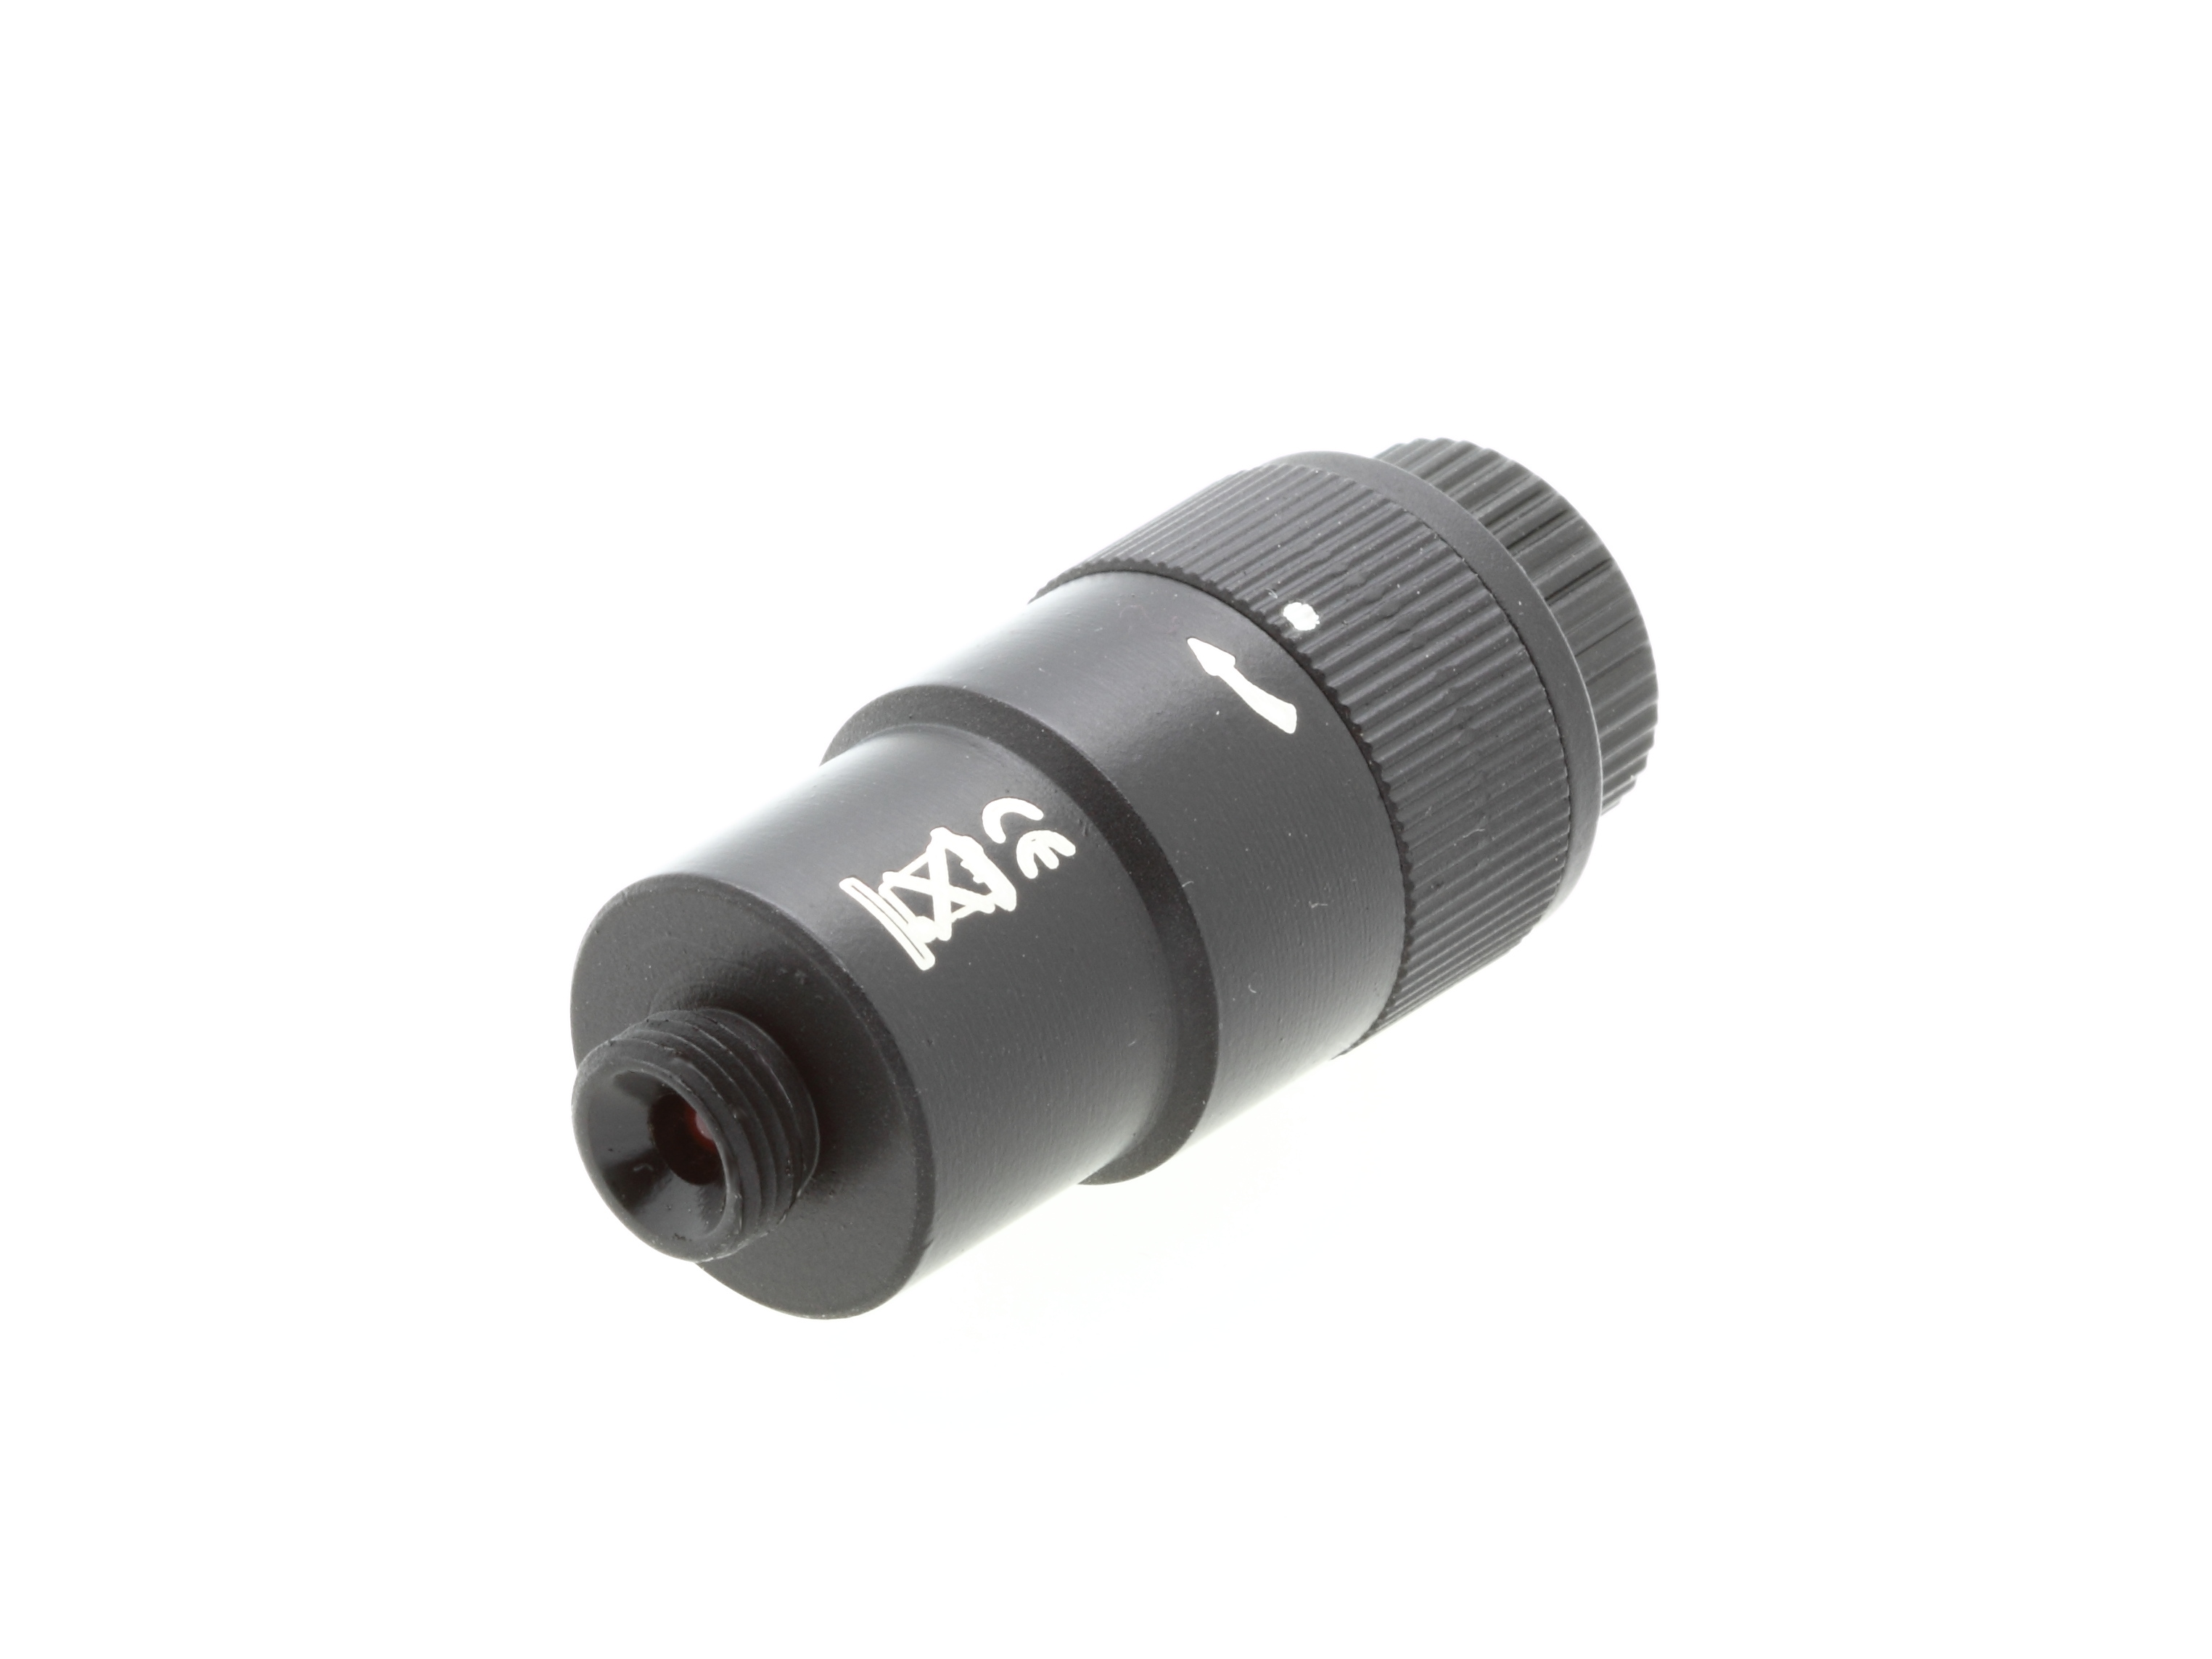 Illumination Unit Polefinder EXOS-2 thread M8x0.75